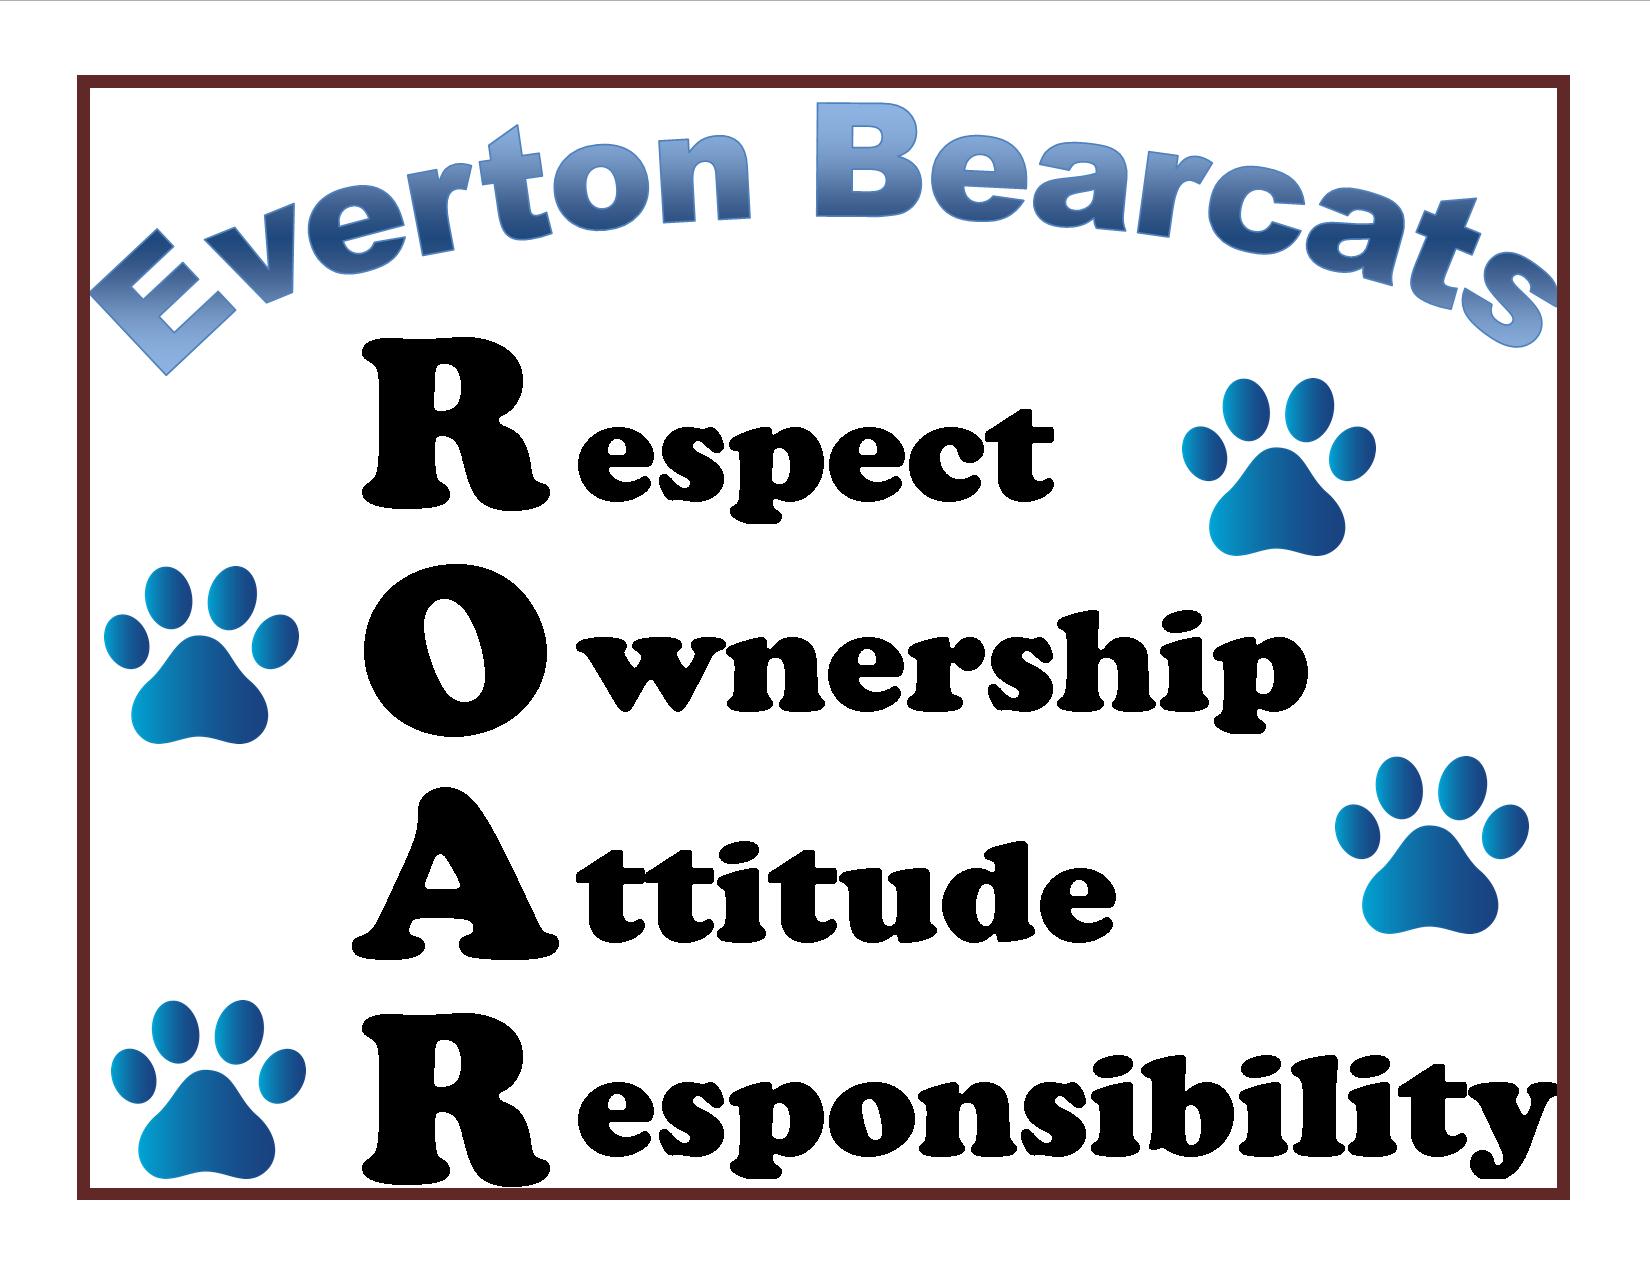 Everton Bearcats Respect Ownership Attitude Responsibility